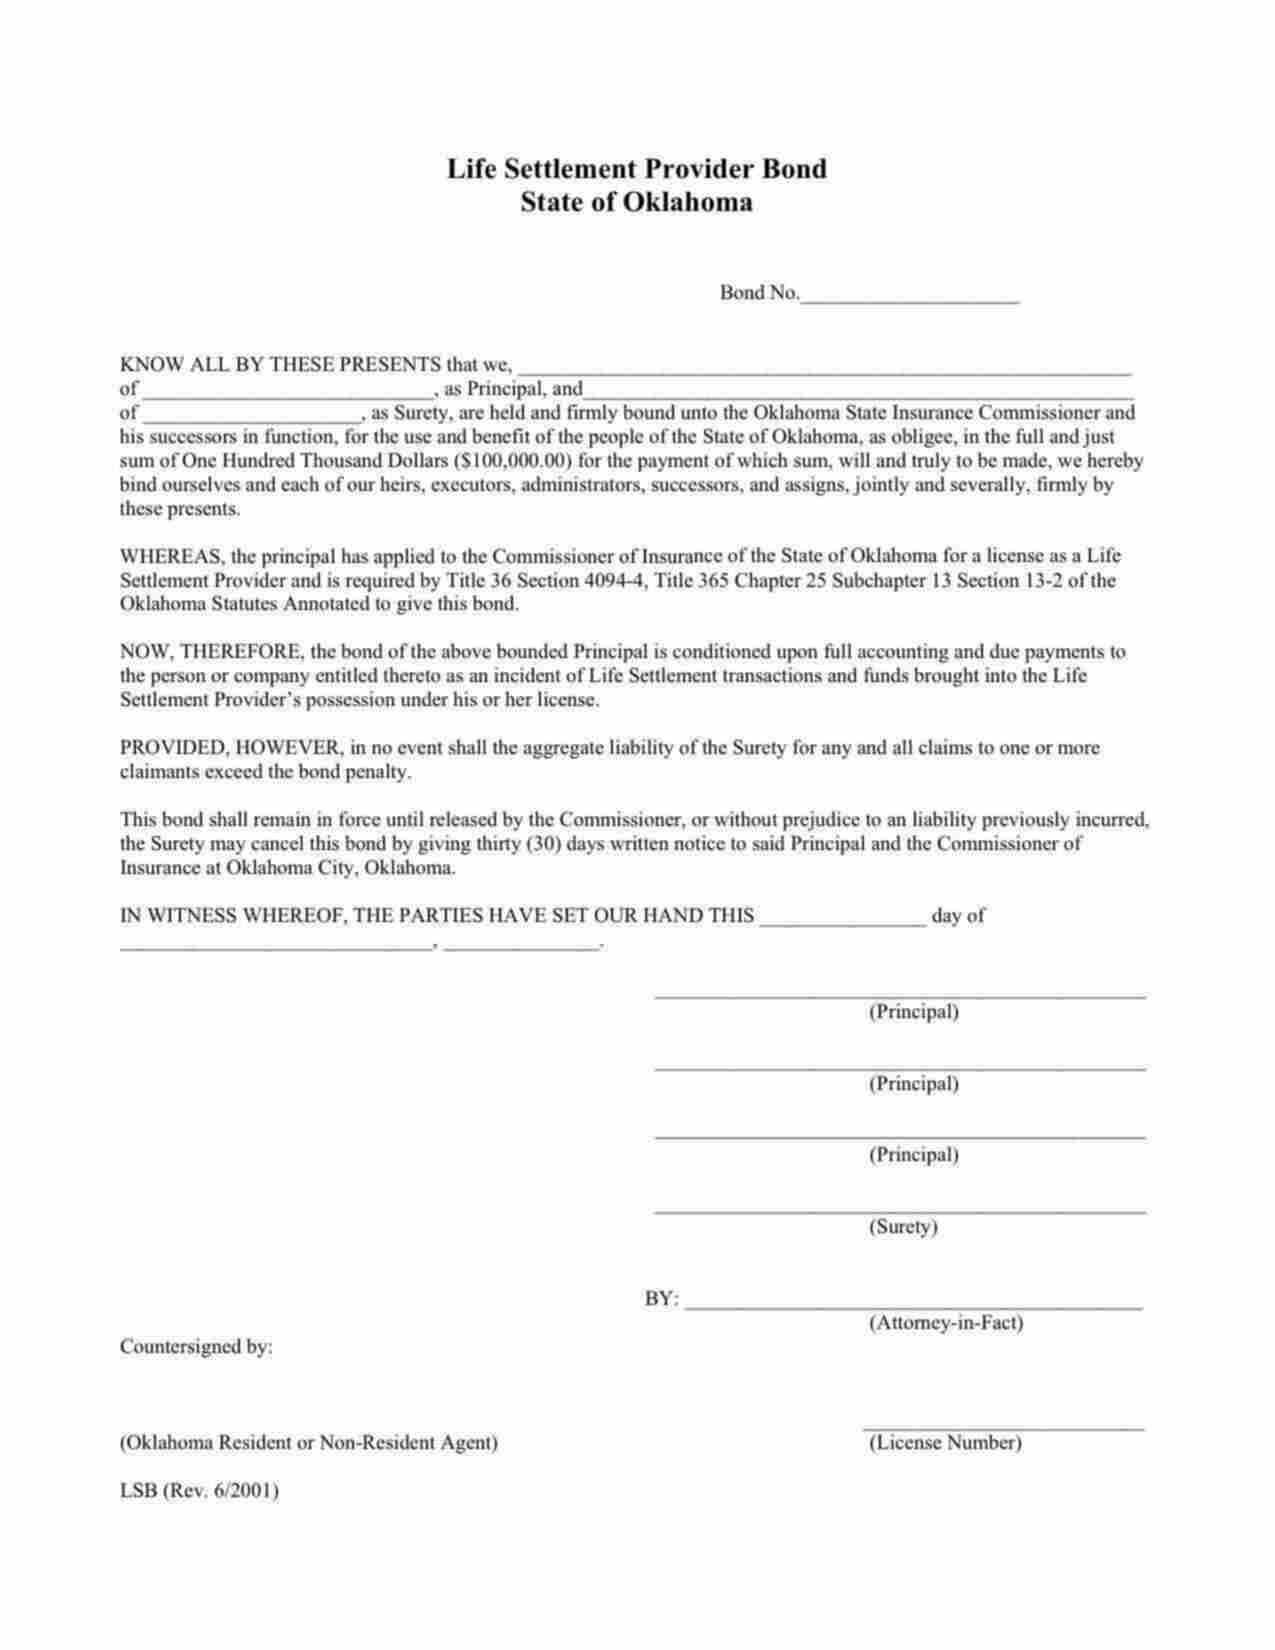 Oklahoma Life Settlement Provider Bond Form